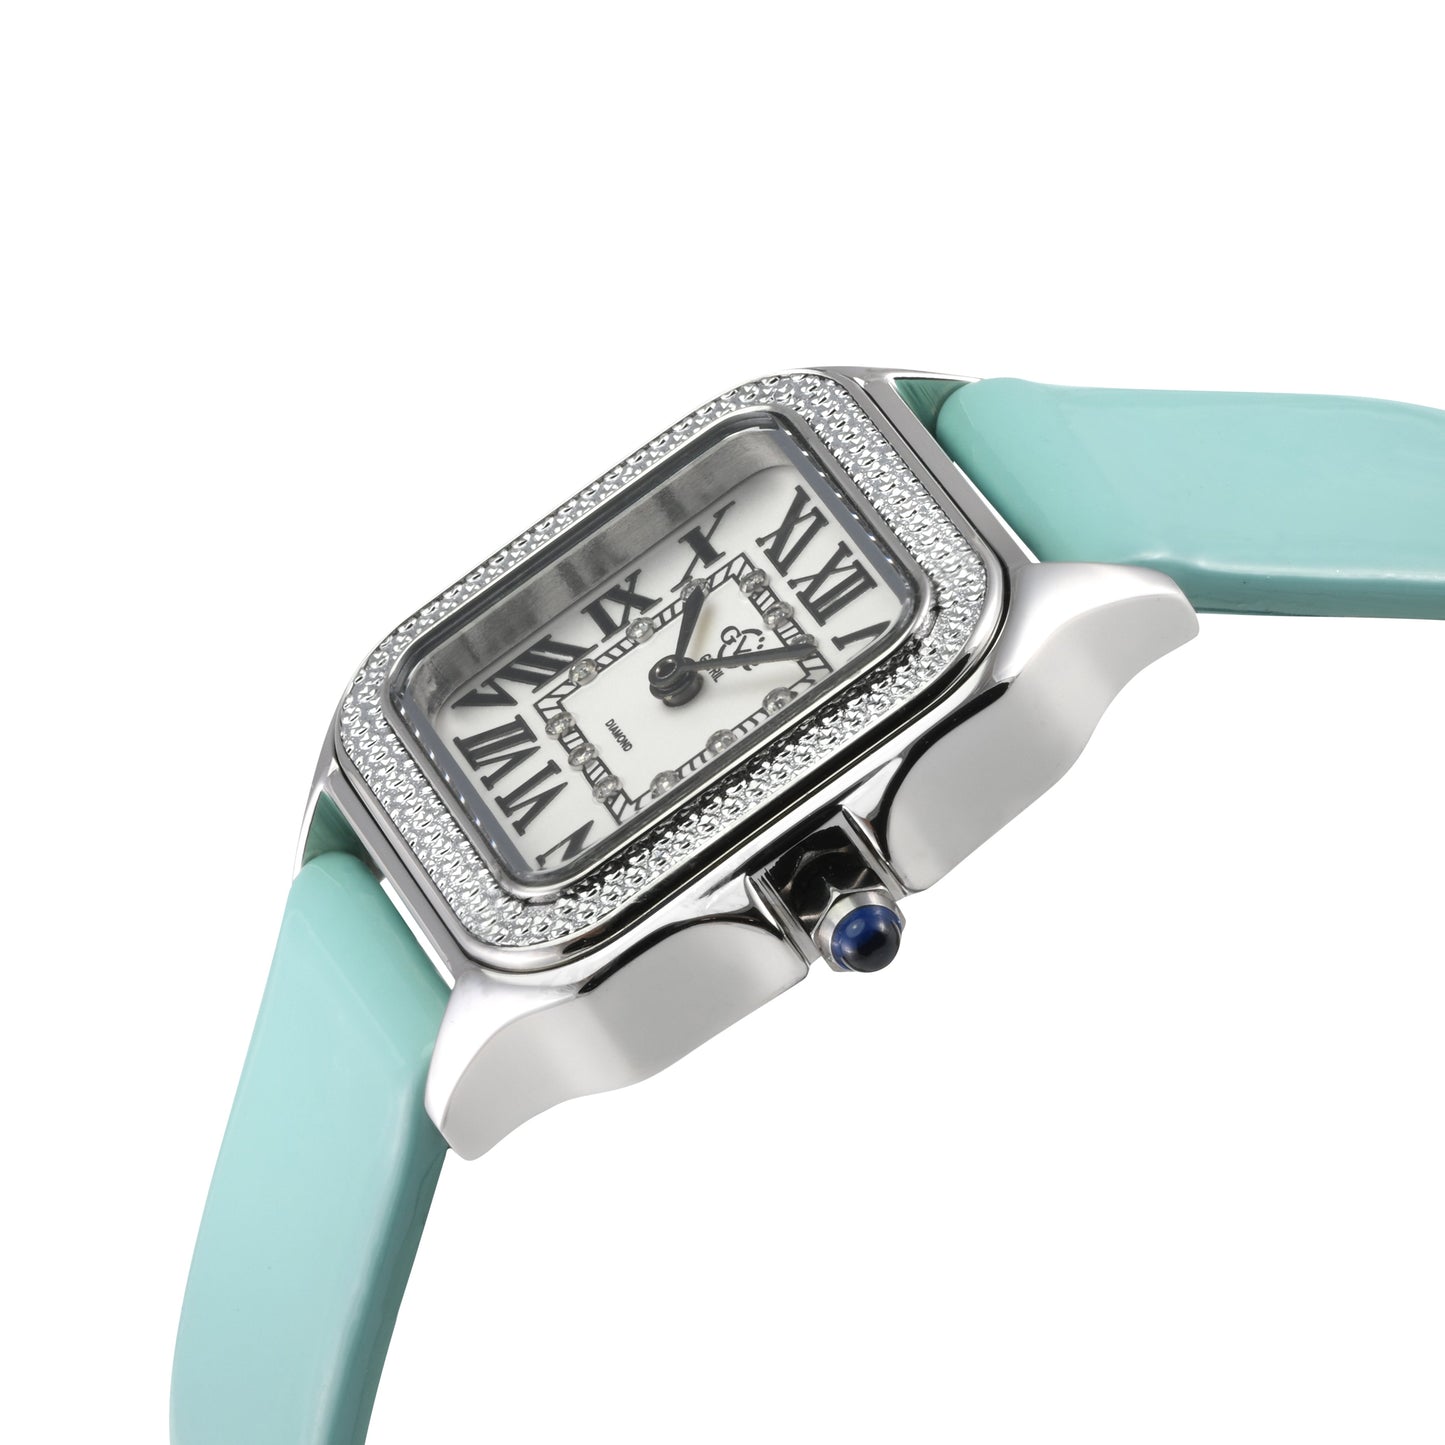 Gevril-Luxury-Swiss-Watches-GV2 Milan Diamond Swiss Quartz-12110-6